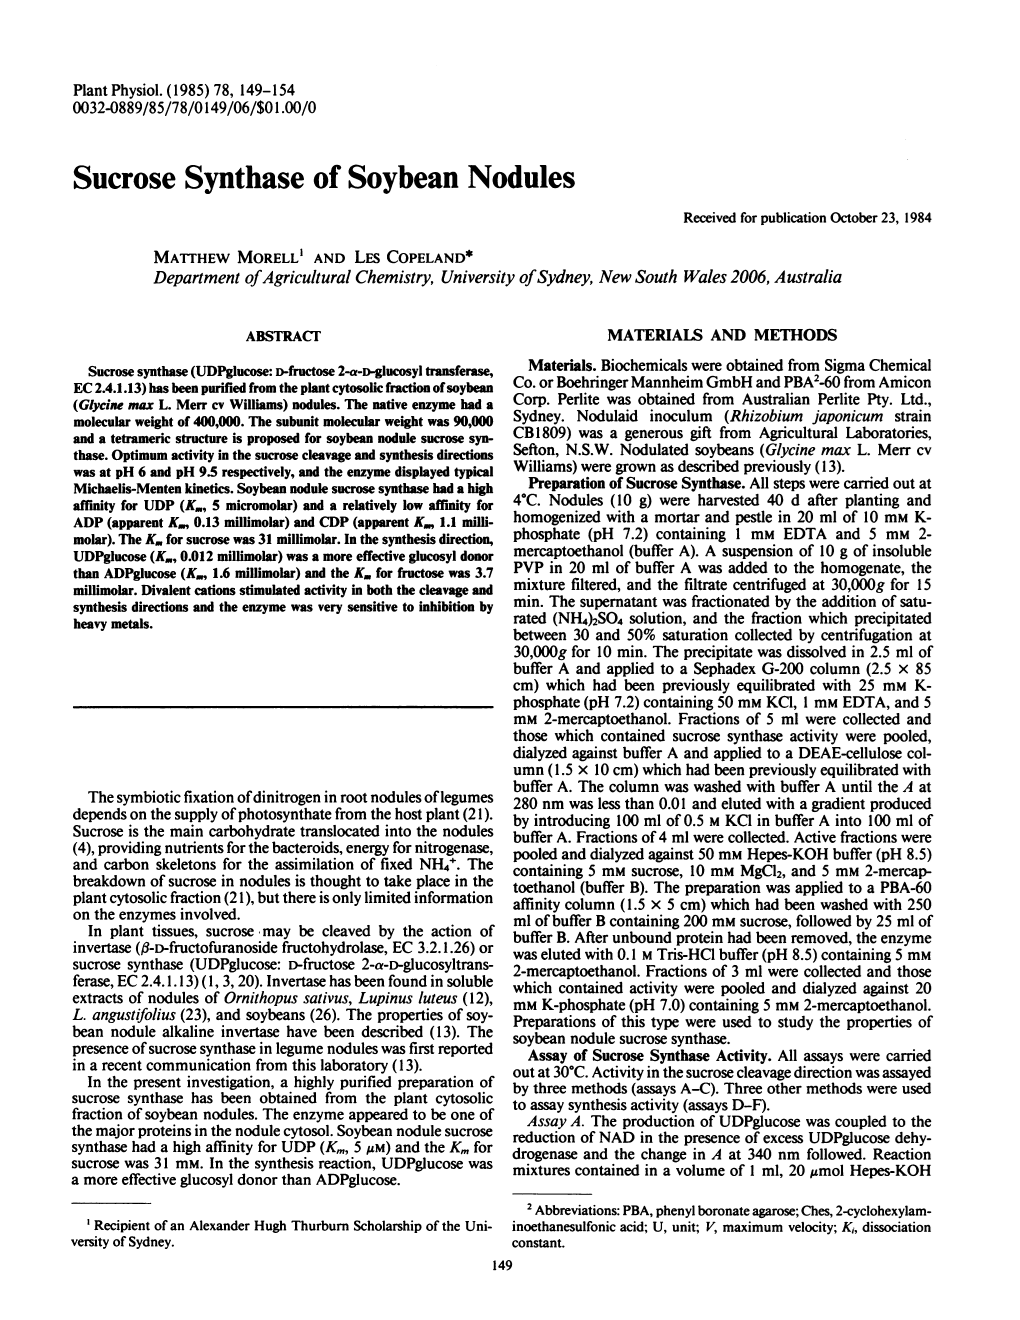 Sucrose Synthase of Soybean Nodules